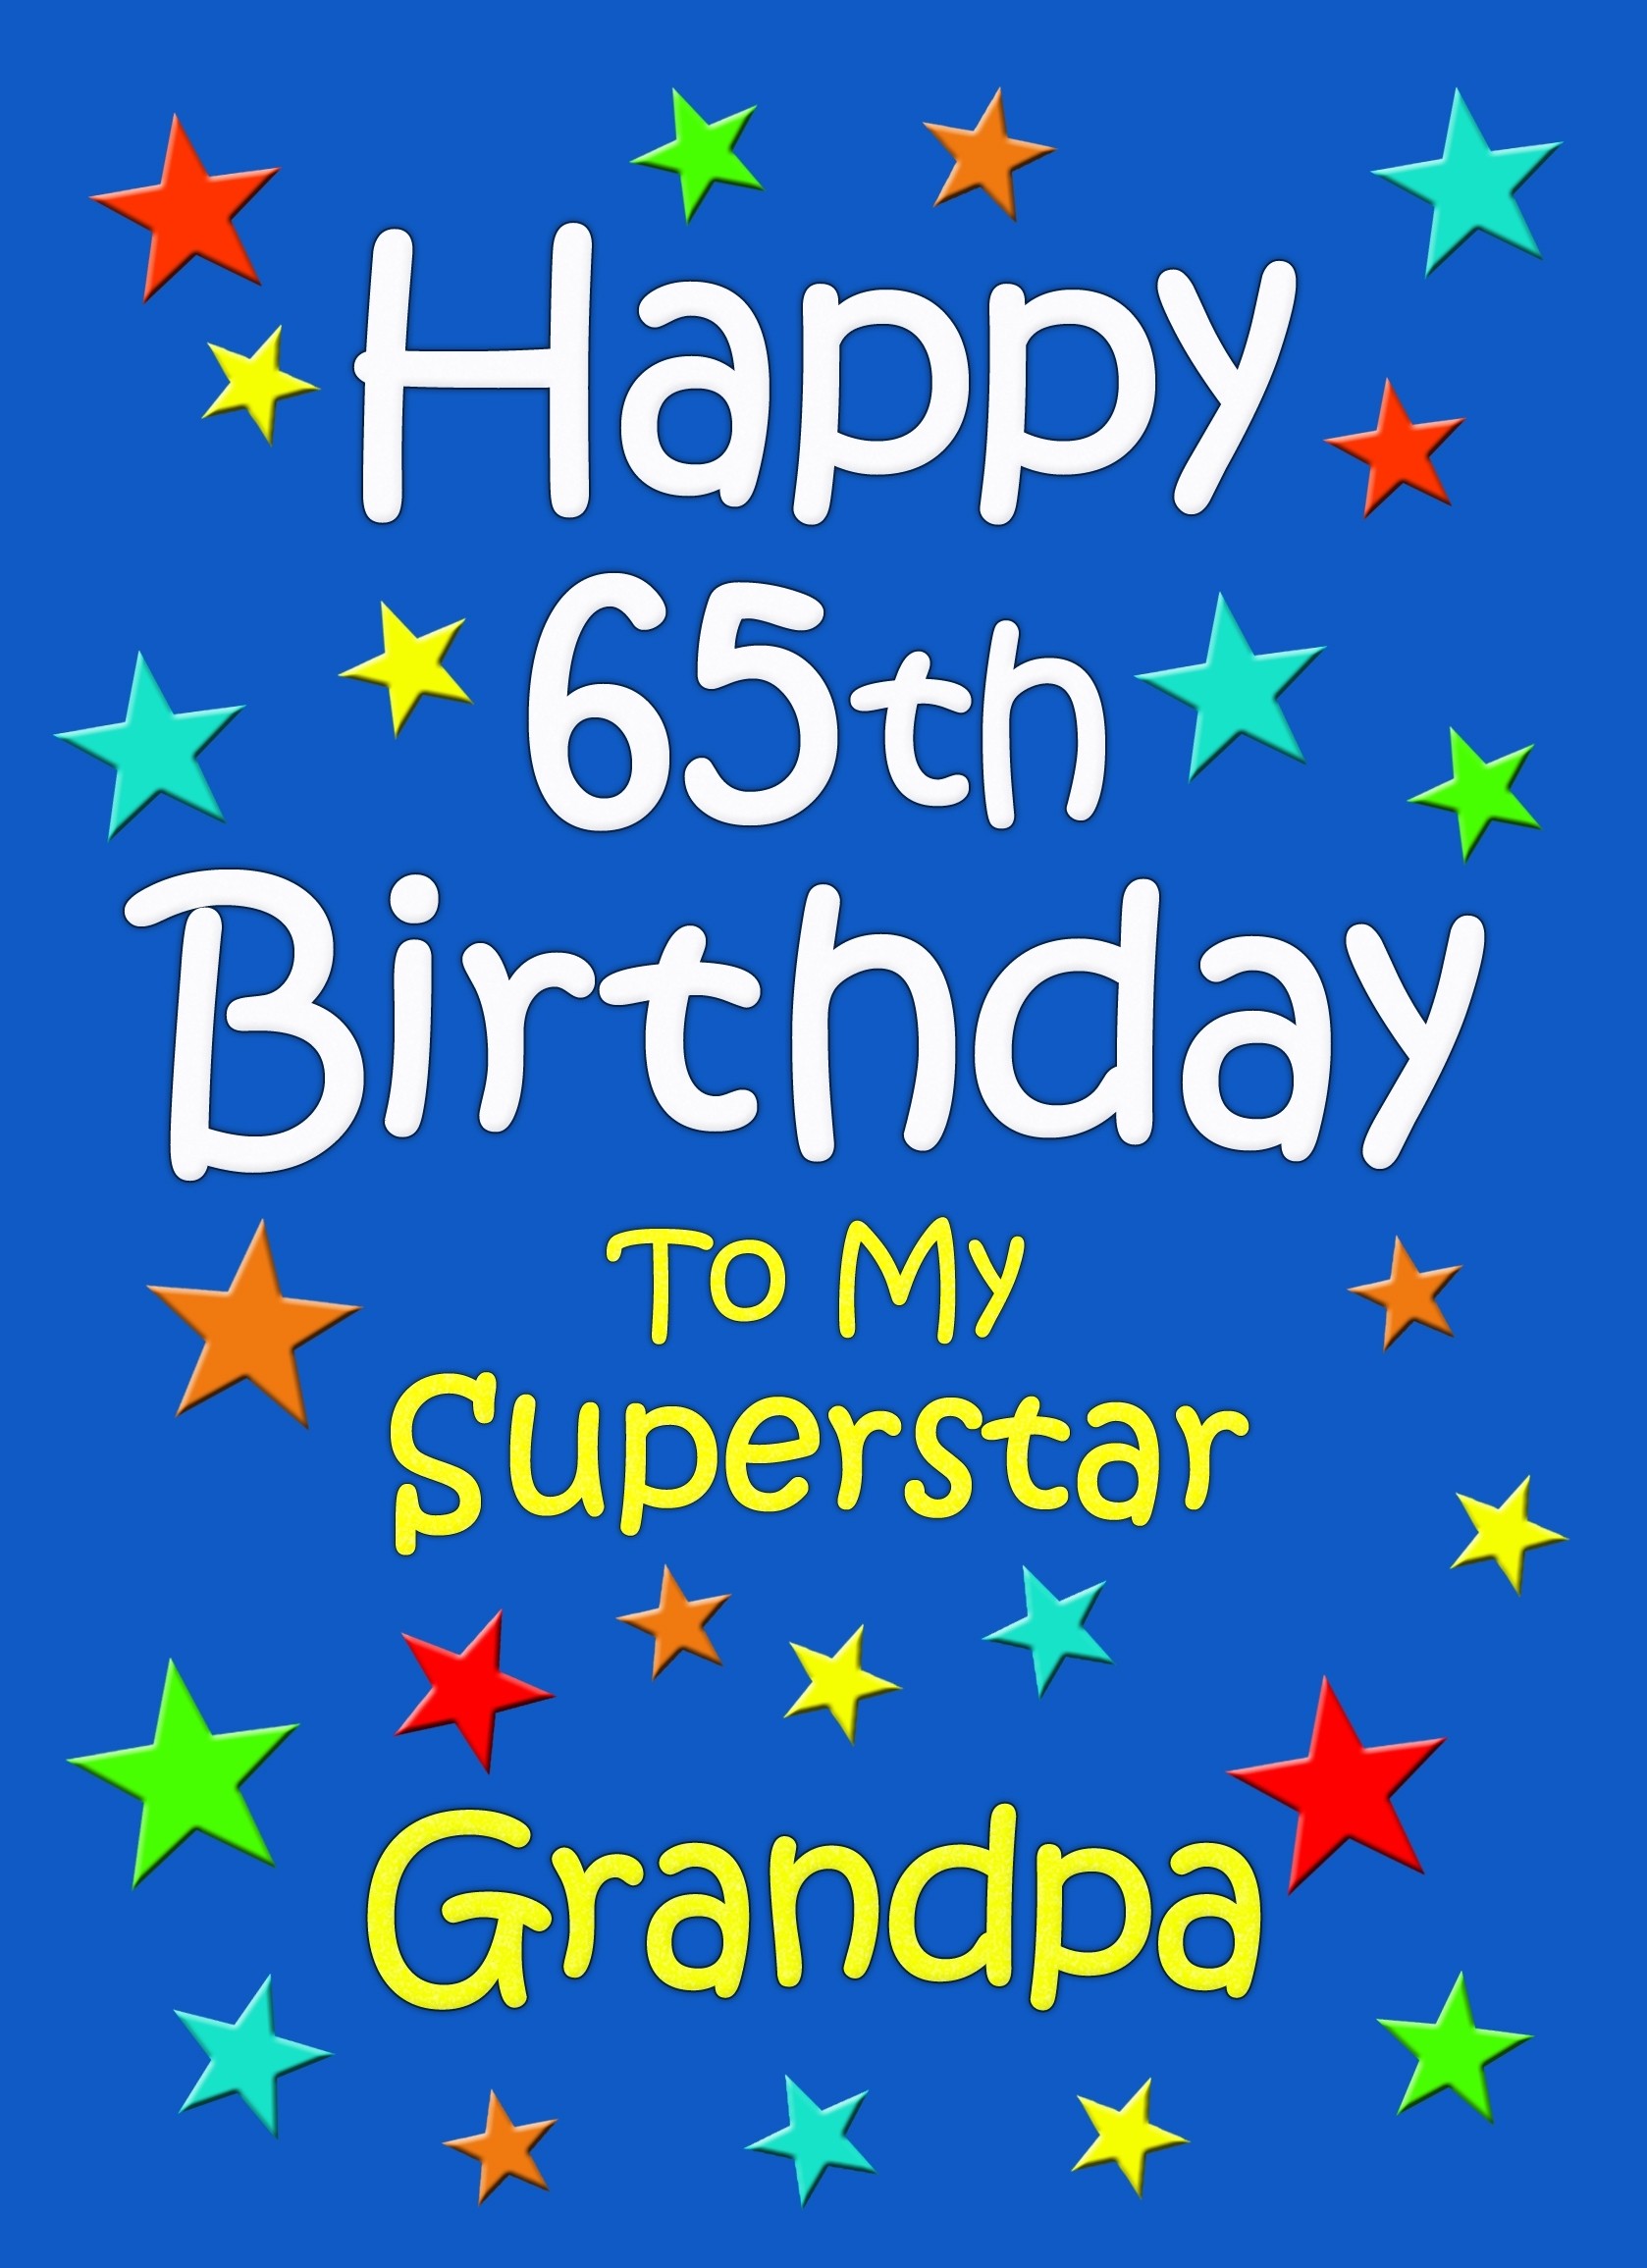 Grandpa 65th Birthday Card (Blue)